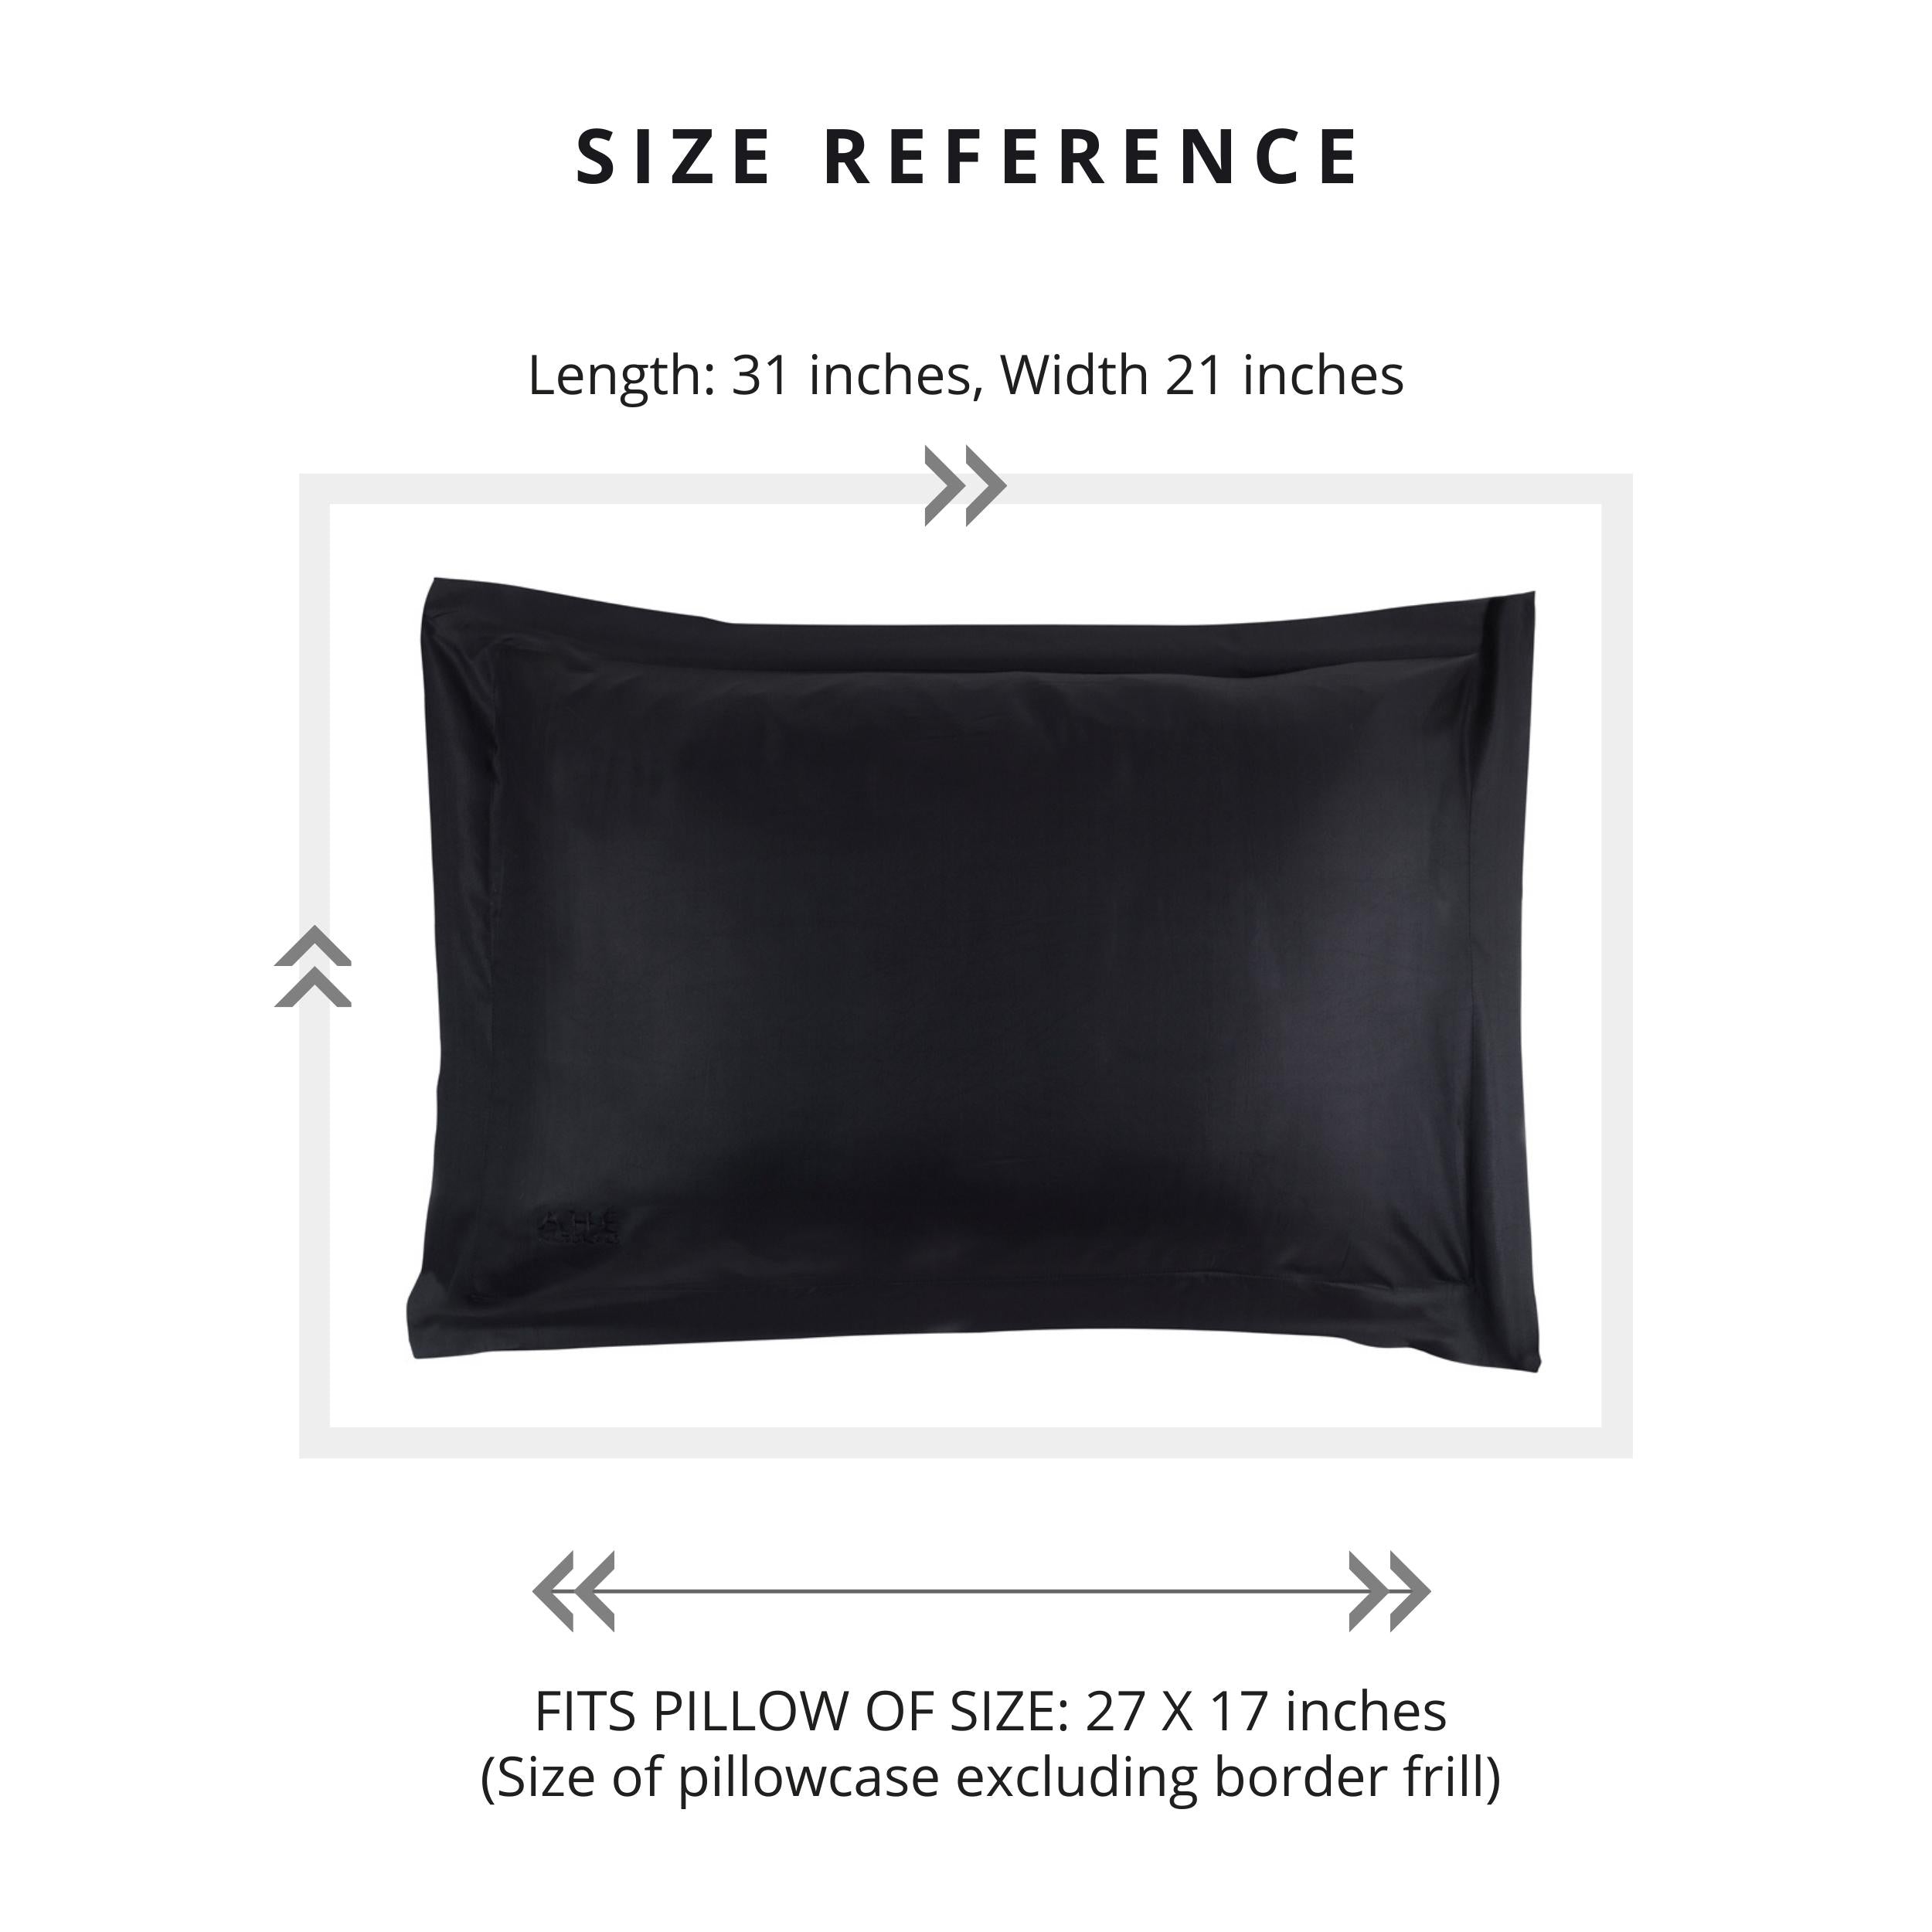 Mulberry Silk Pillowcase (Anti-Split-Ends) Jet Black - Ahé Naturals